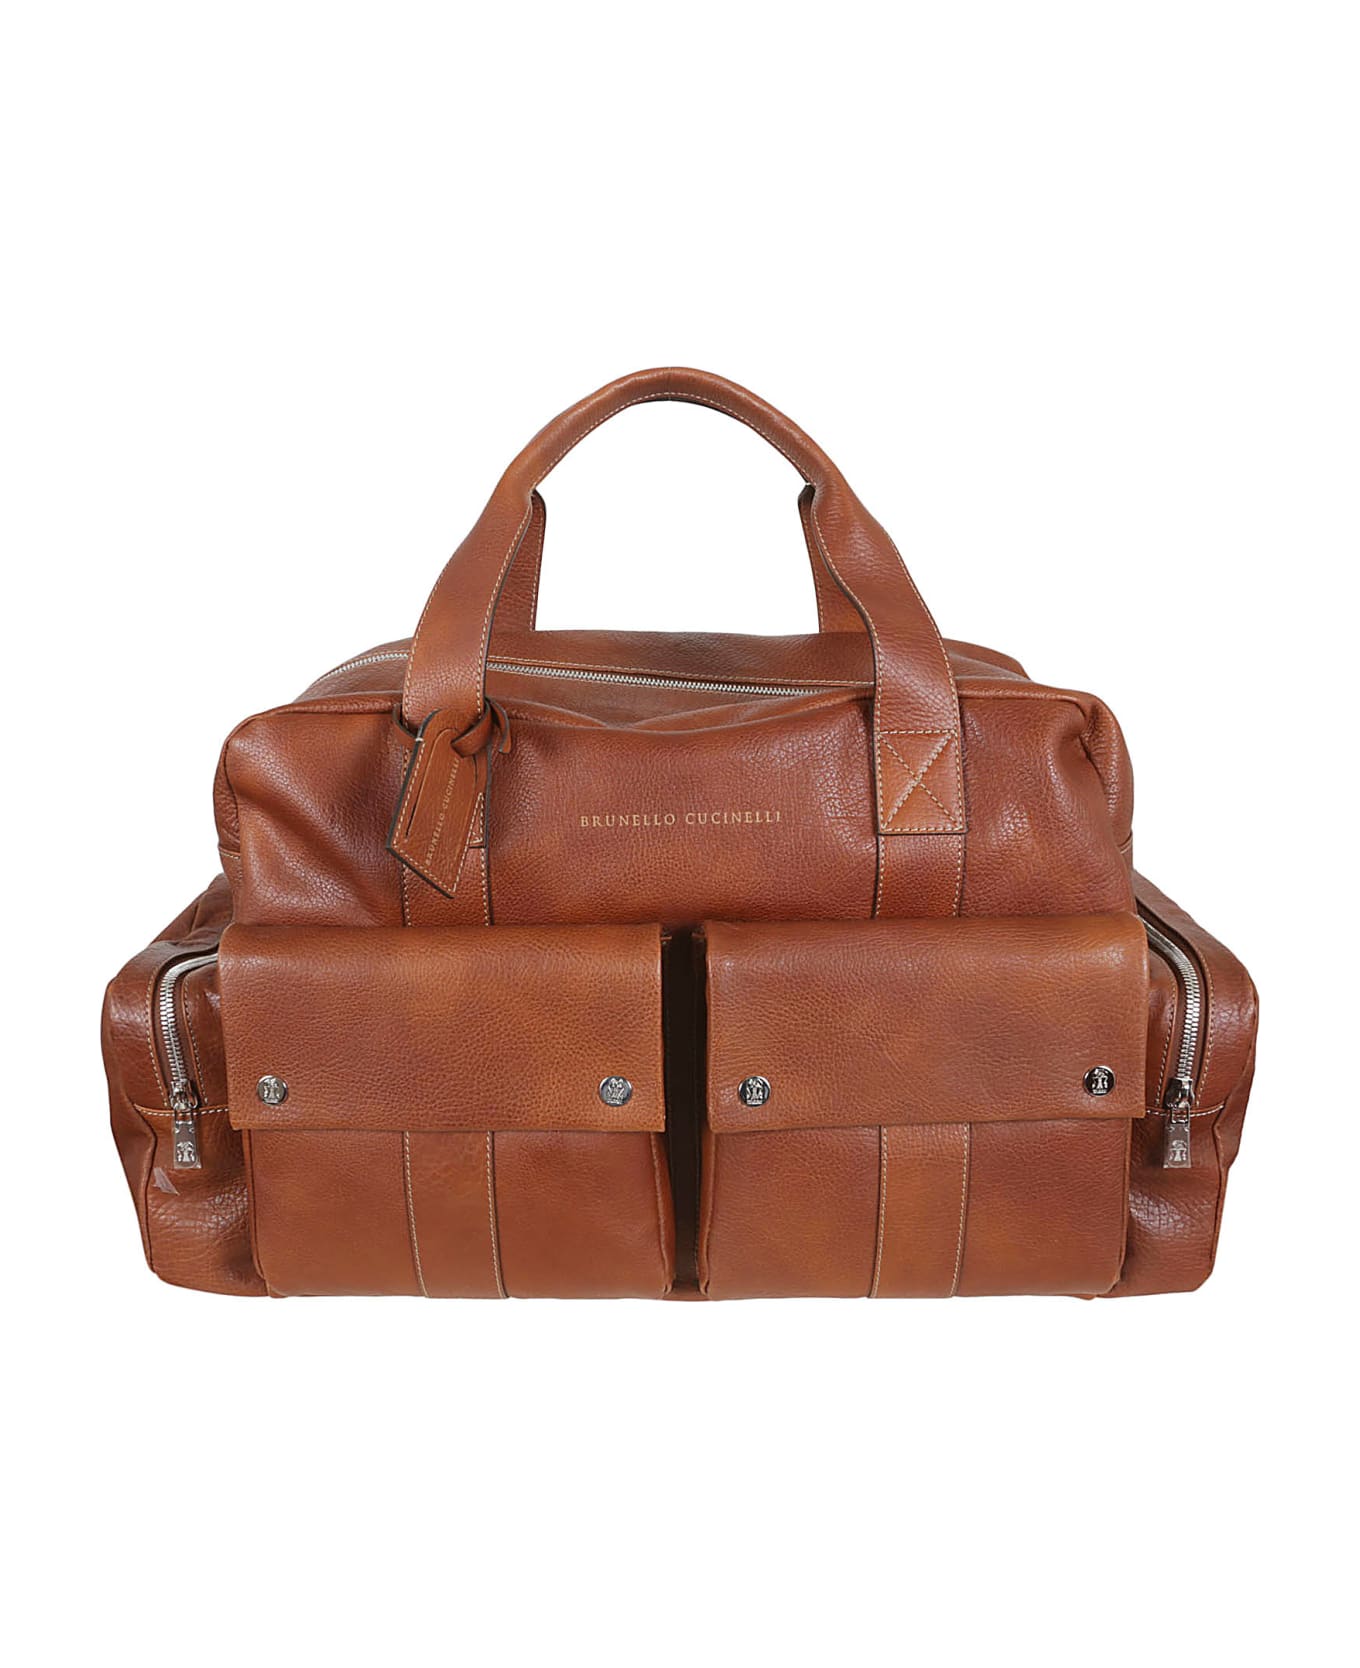 Brunello Cucinelli Leather Bag